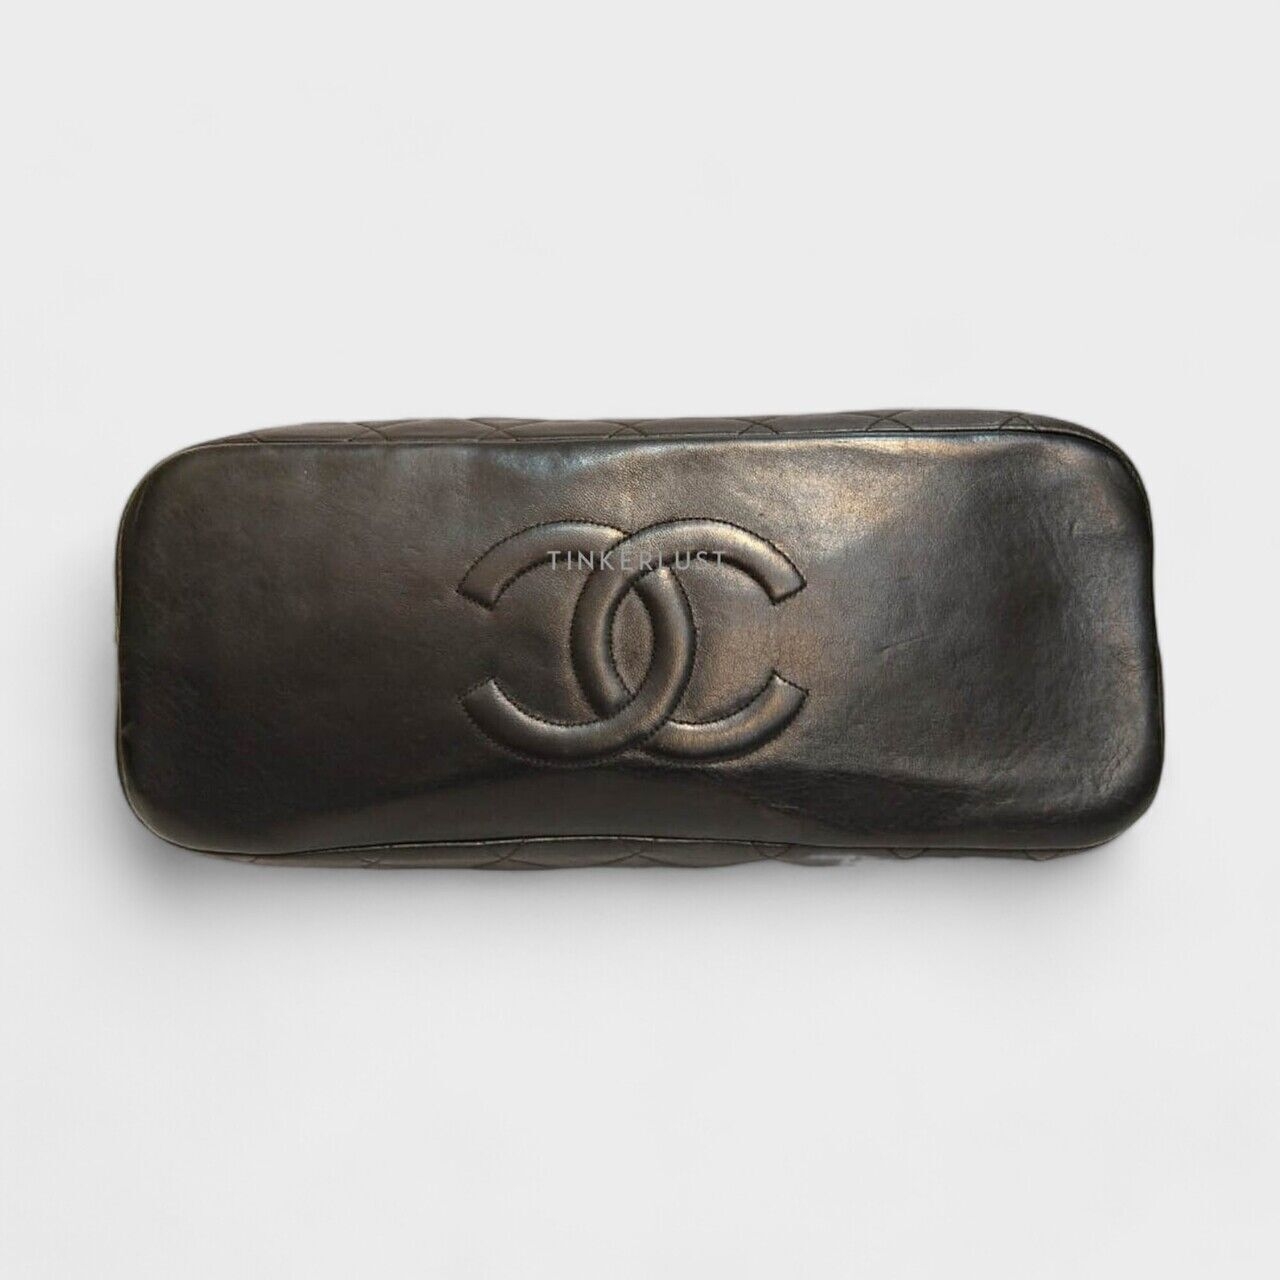 Chanel Mademoiselle Kiss Lock Black Vintage Clutch